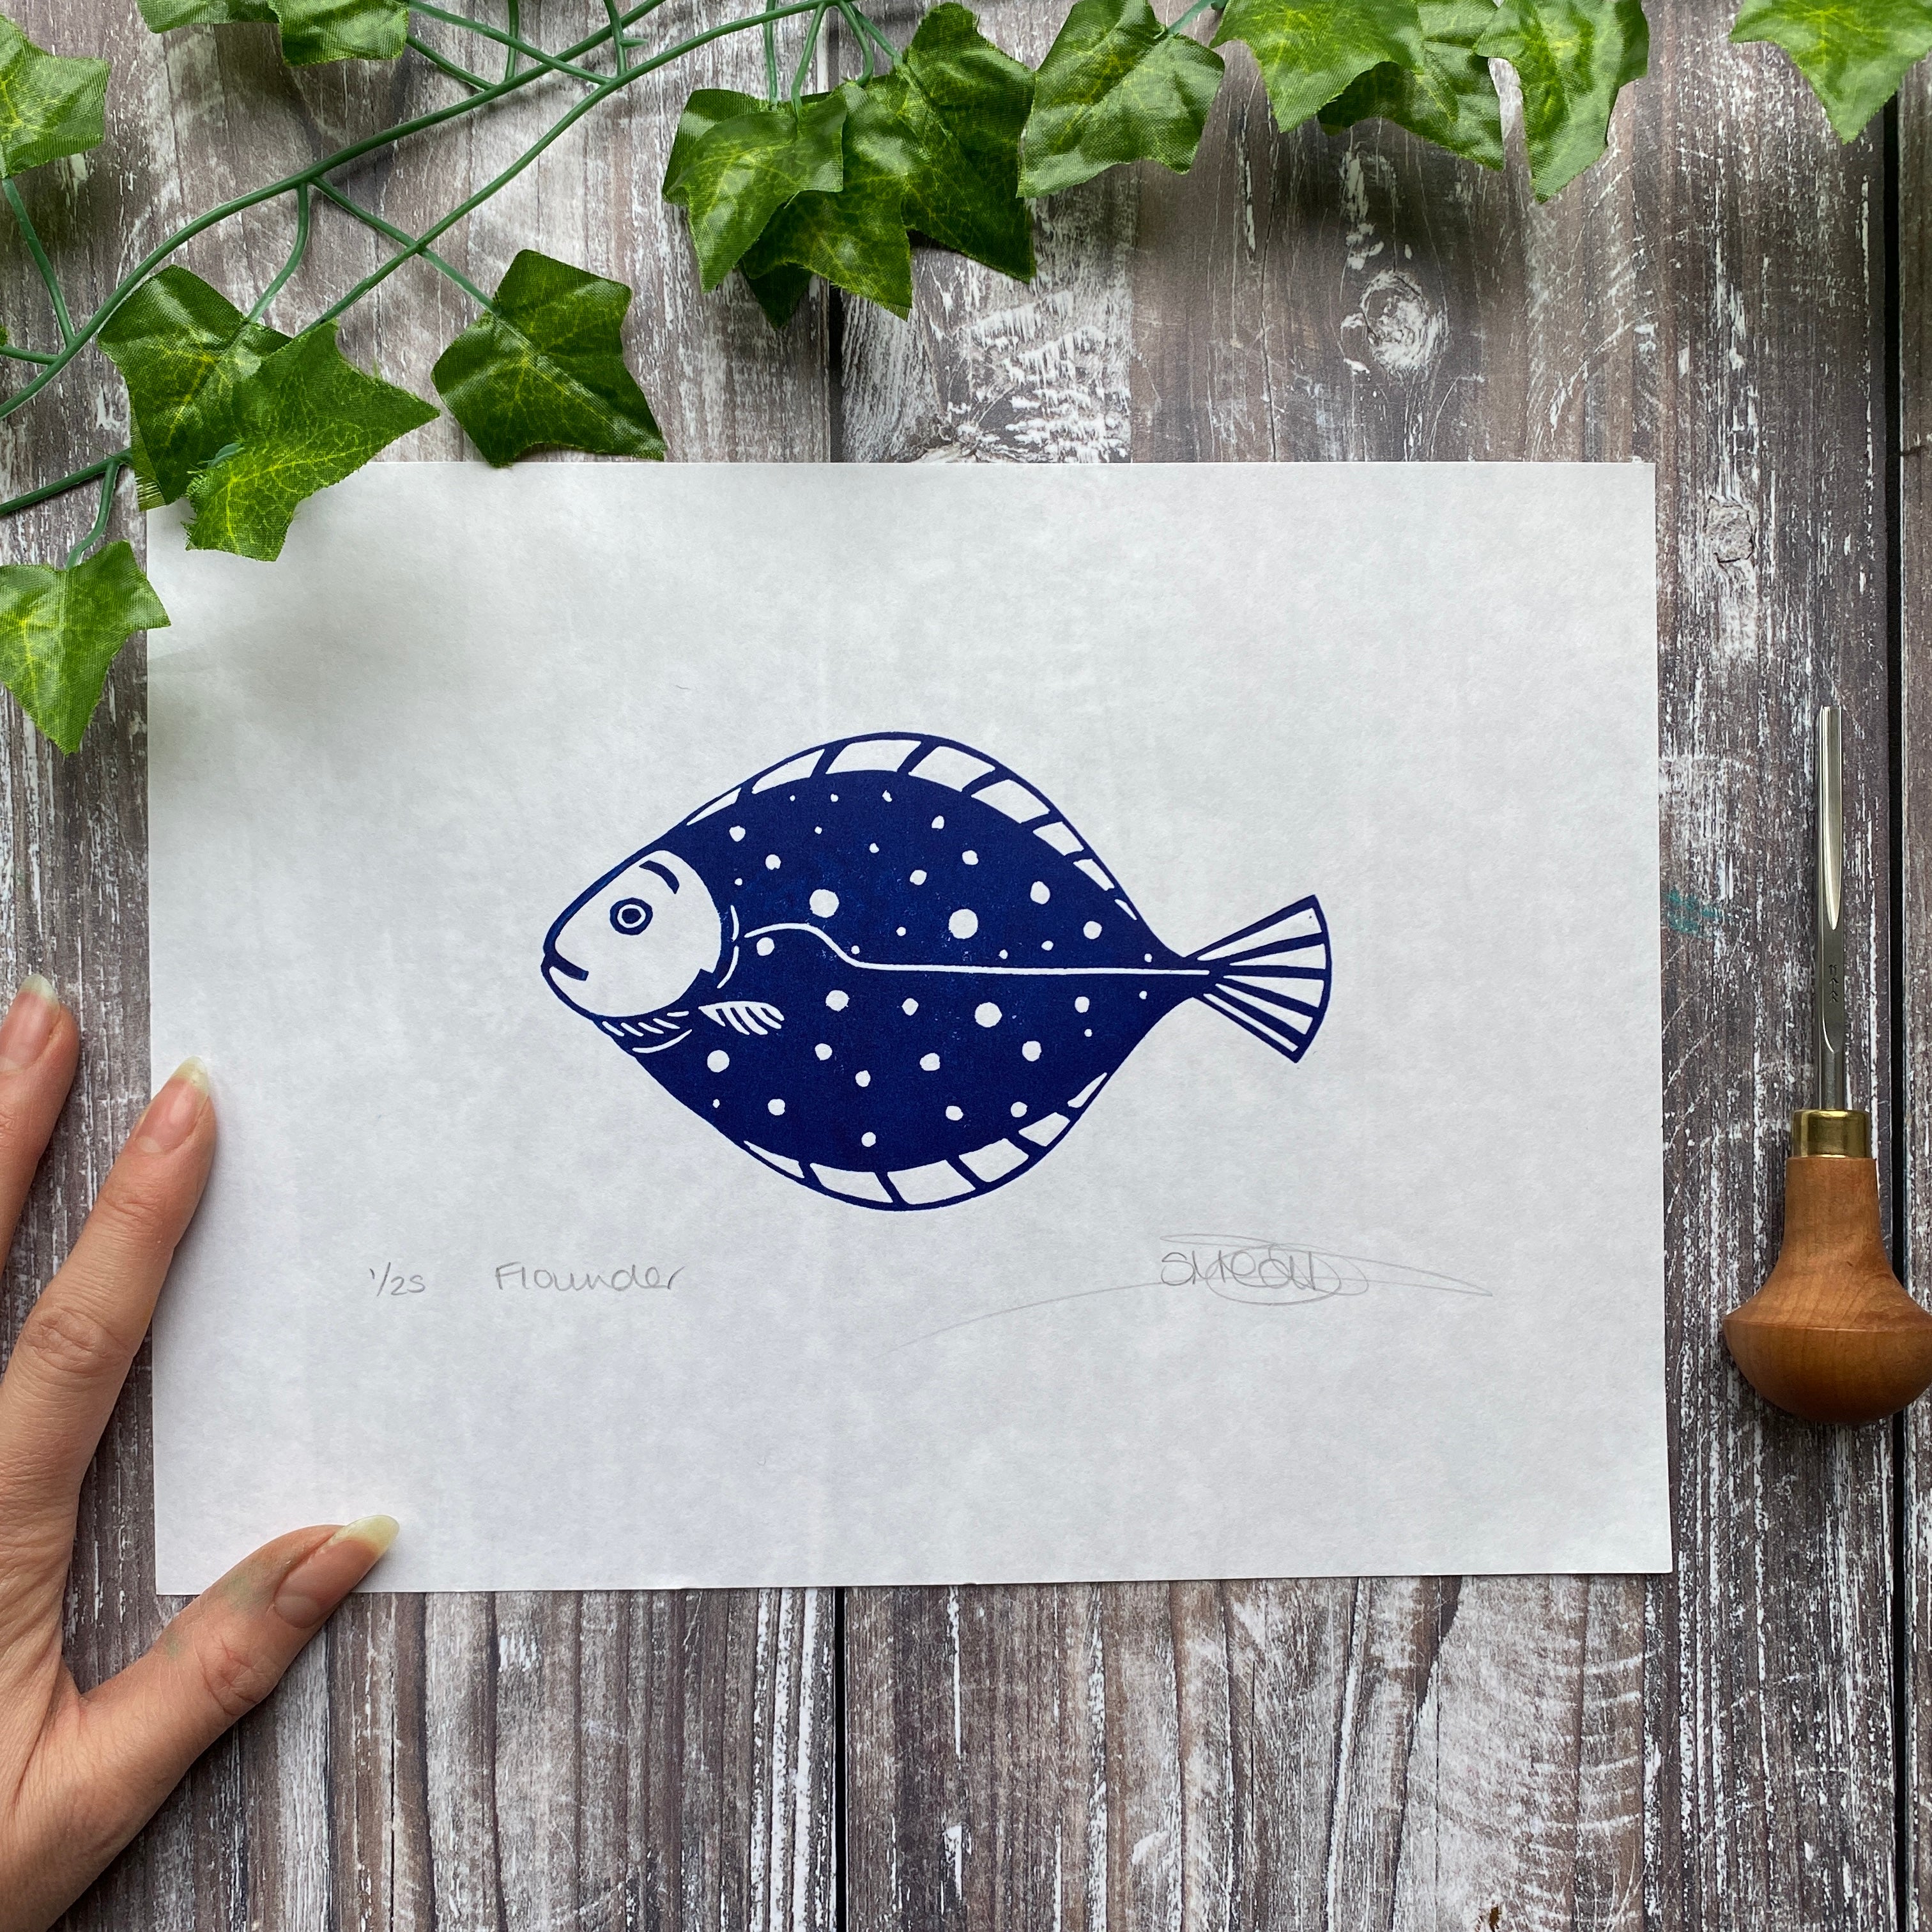 Flounder (Fish) - Original Linocut Print